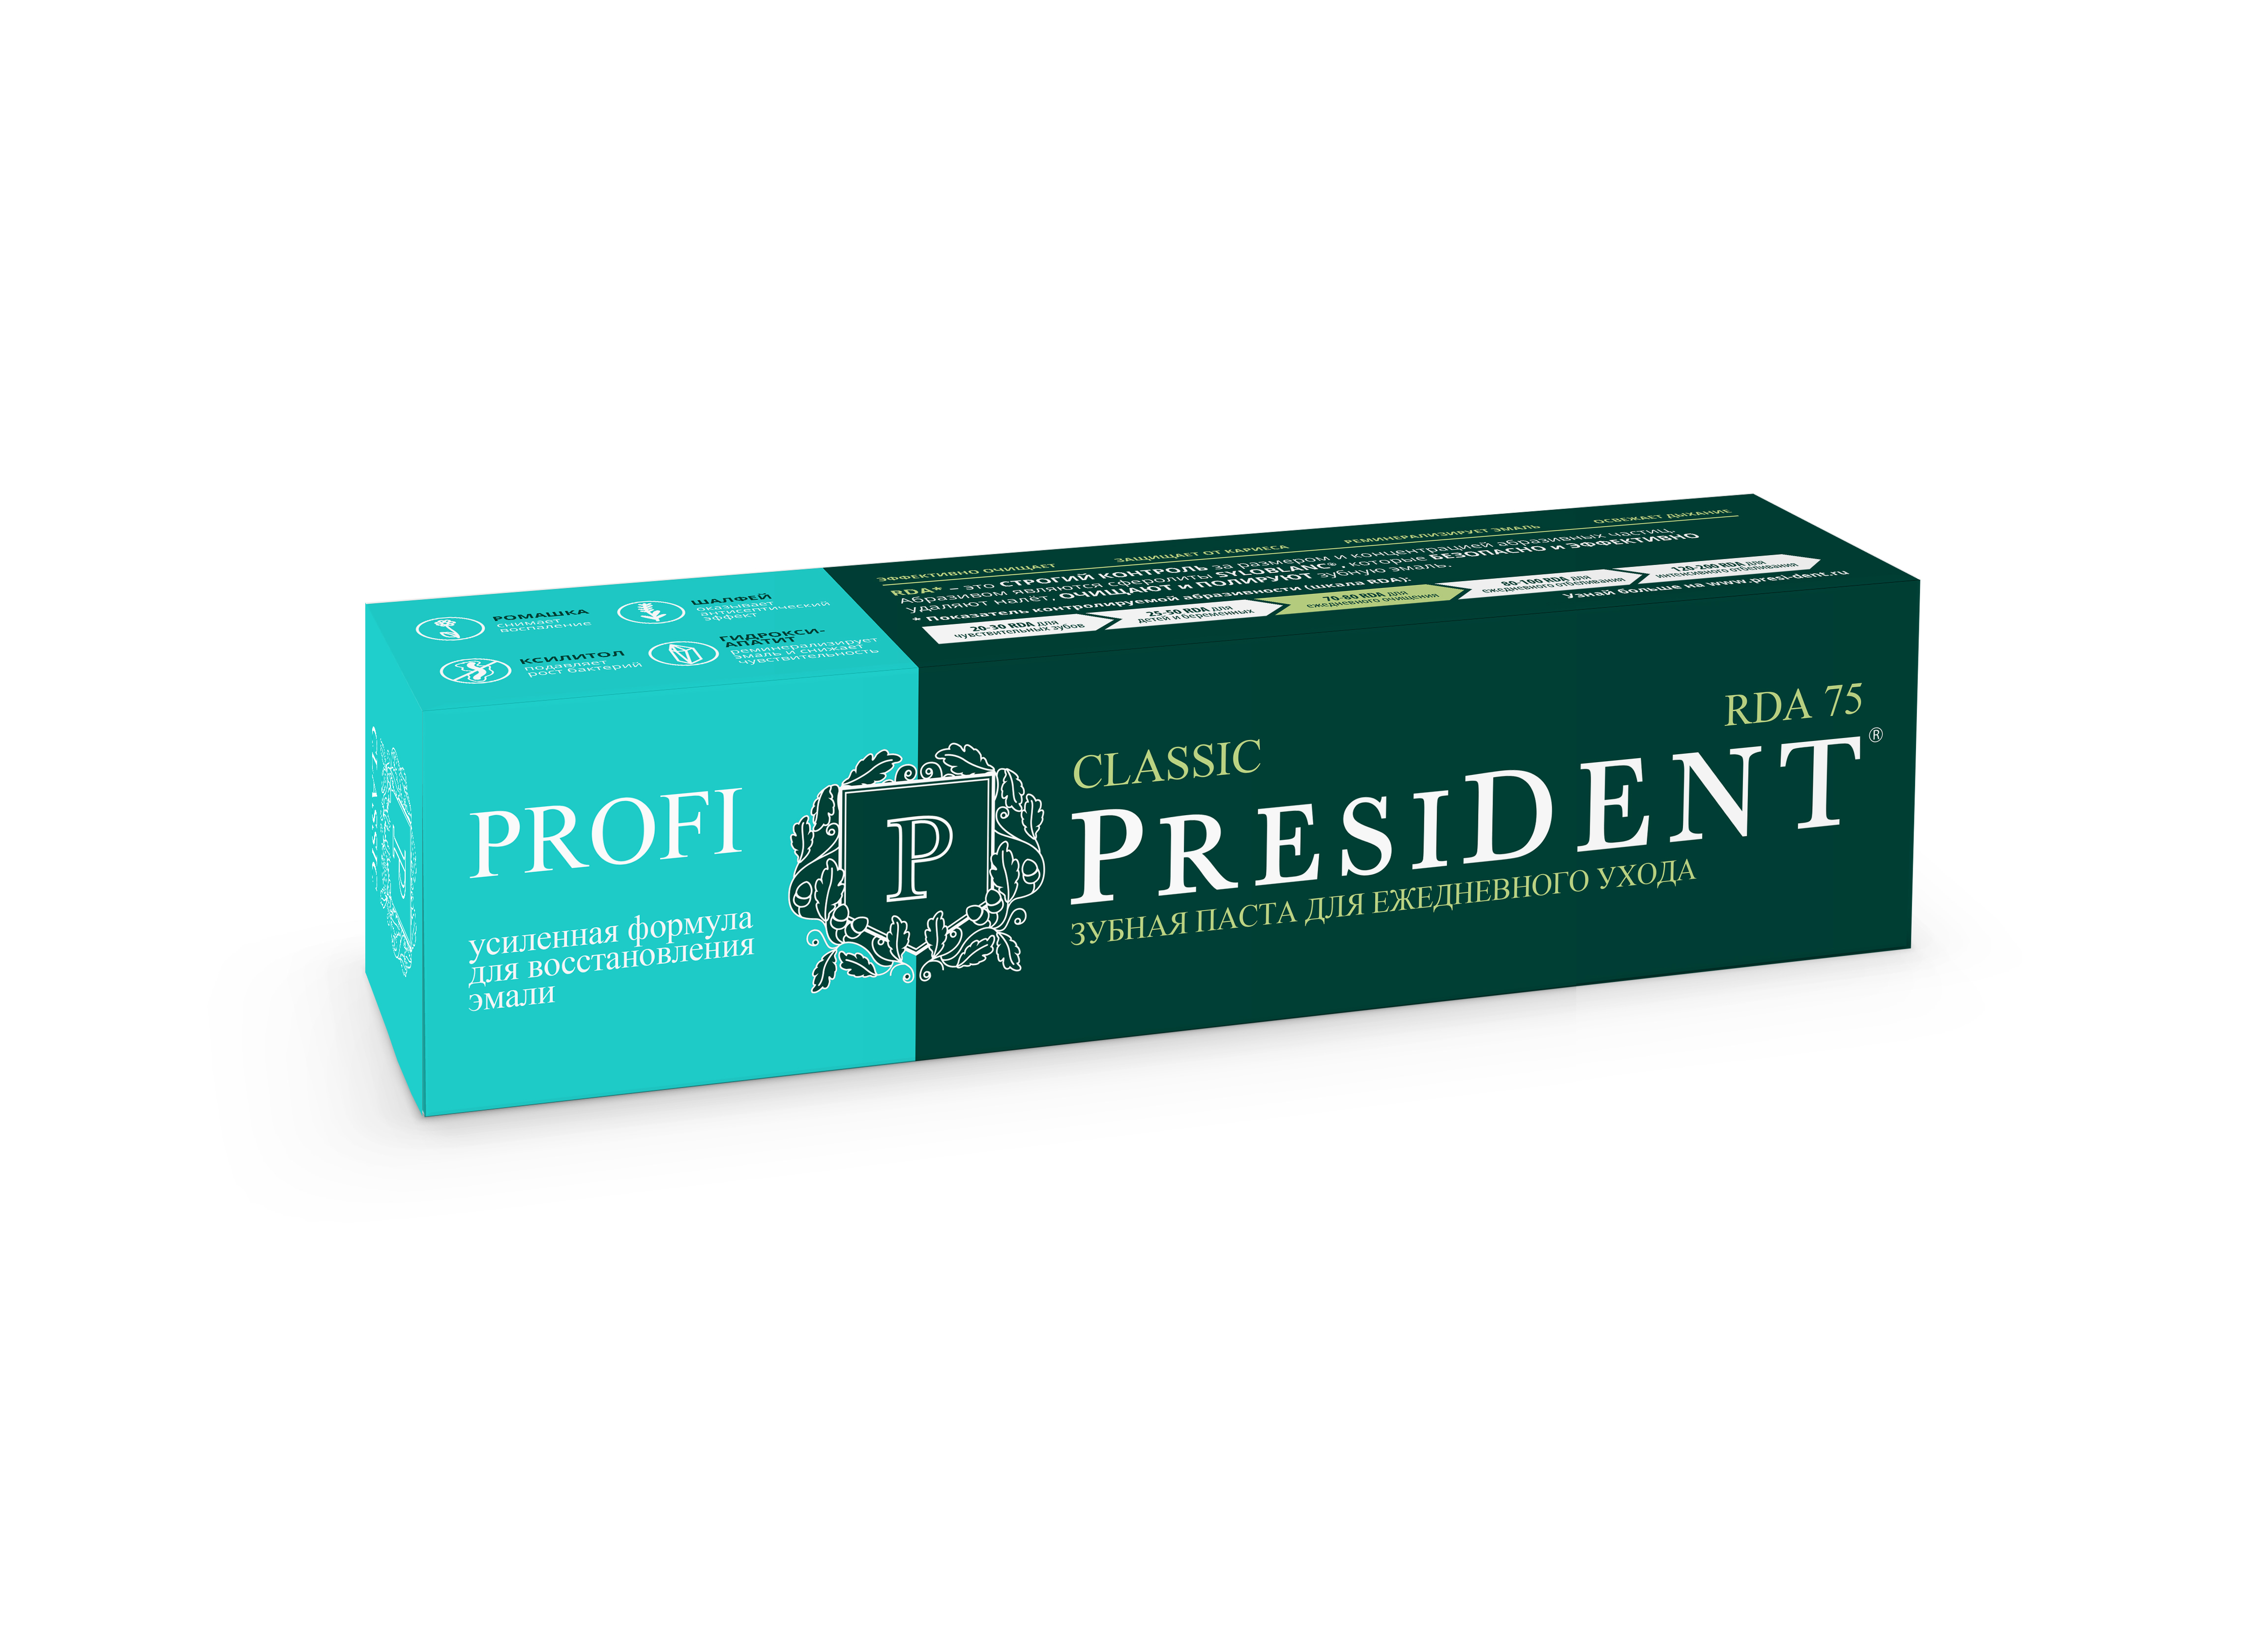 Зубная паста PRESIDENT PROFI Classic (75 RDA), 50 мл